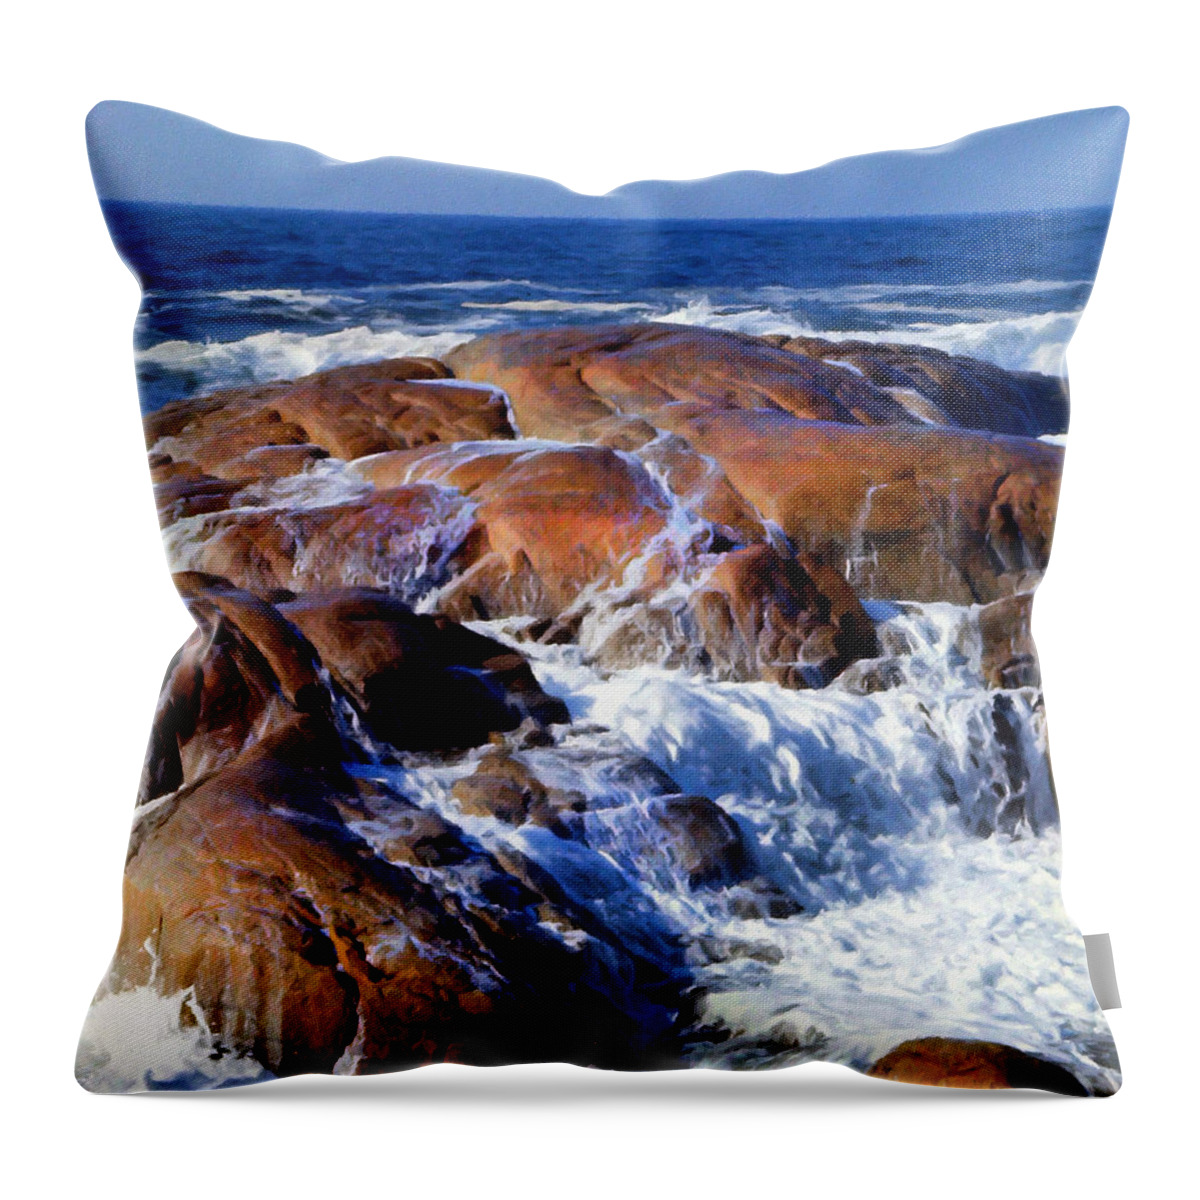 Rocks Awash Throw Pillow featuring the photograph Rocks Awash by Frank Wilson